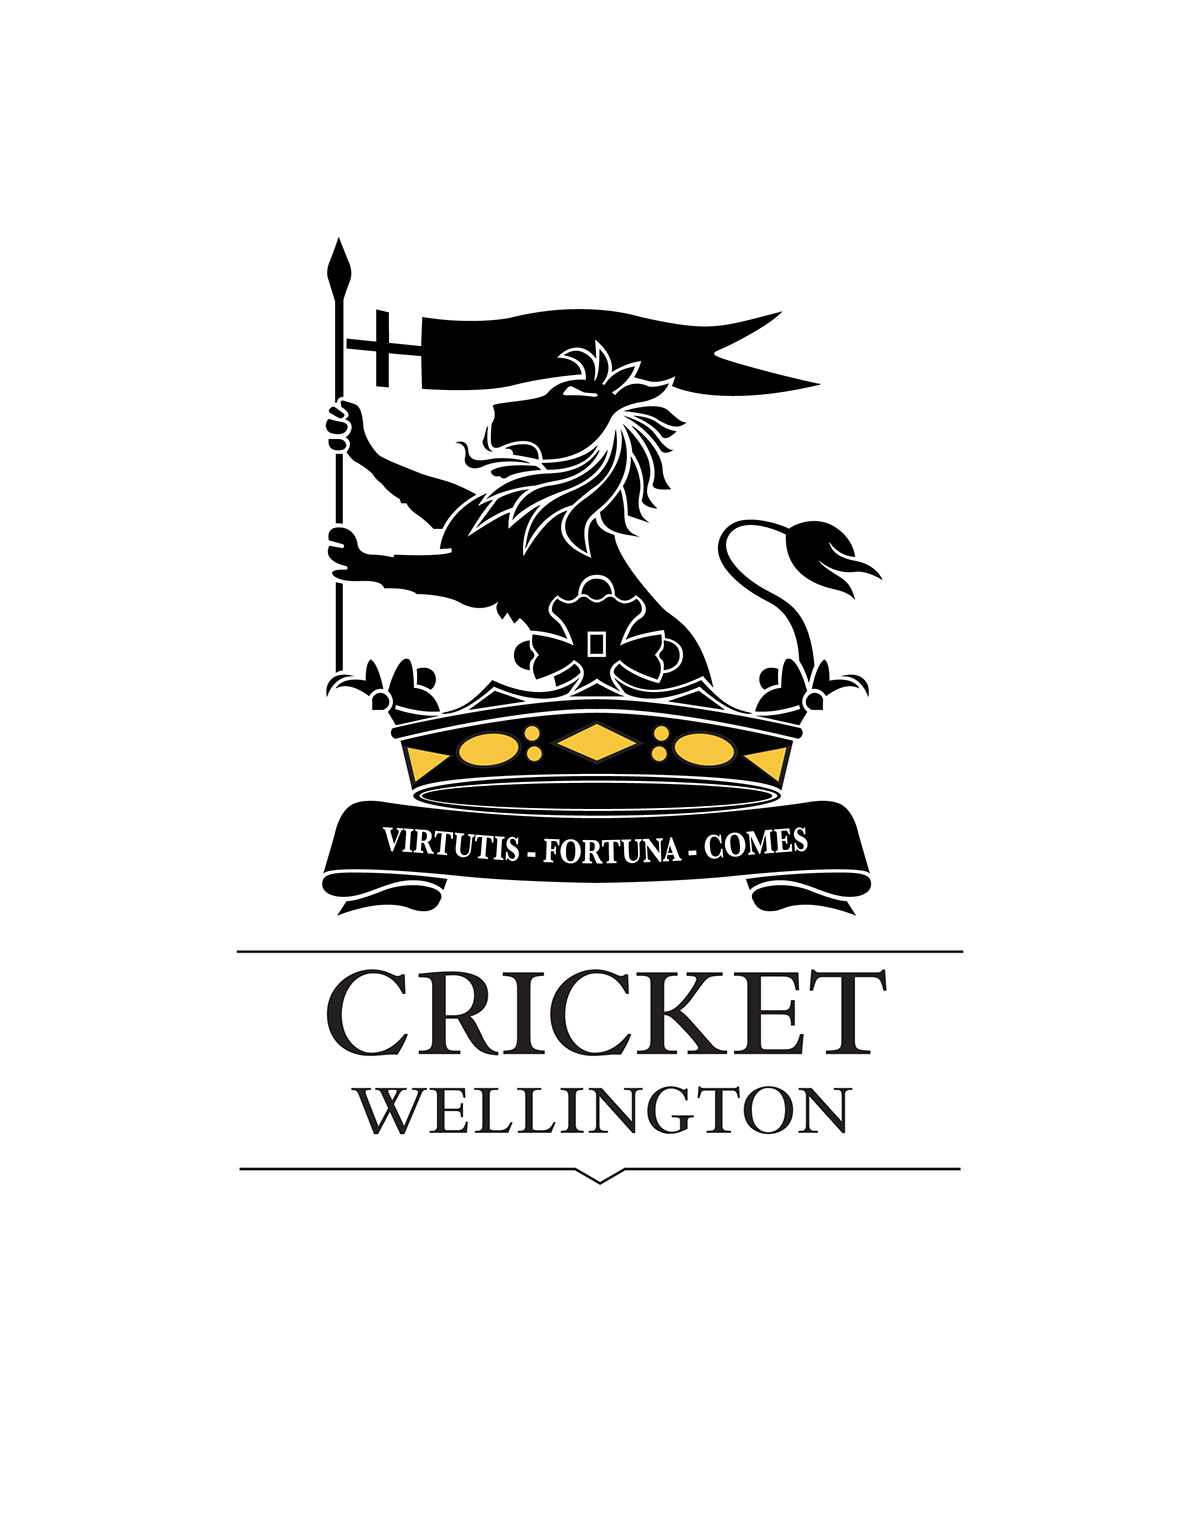 Cricket summer slow Desaturated Booklet video logo crest heraldry New Zealand wellington